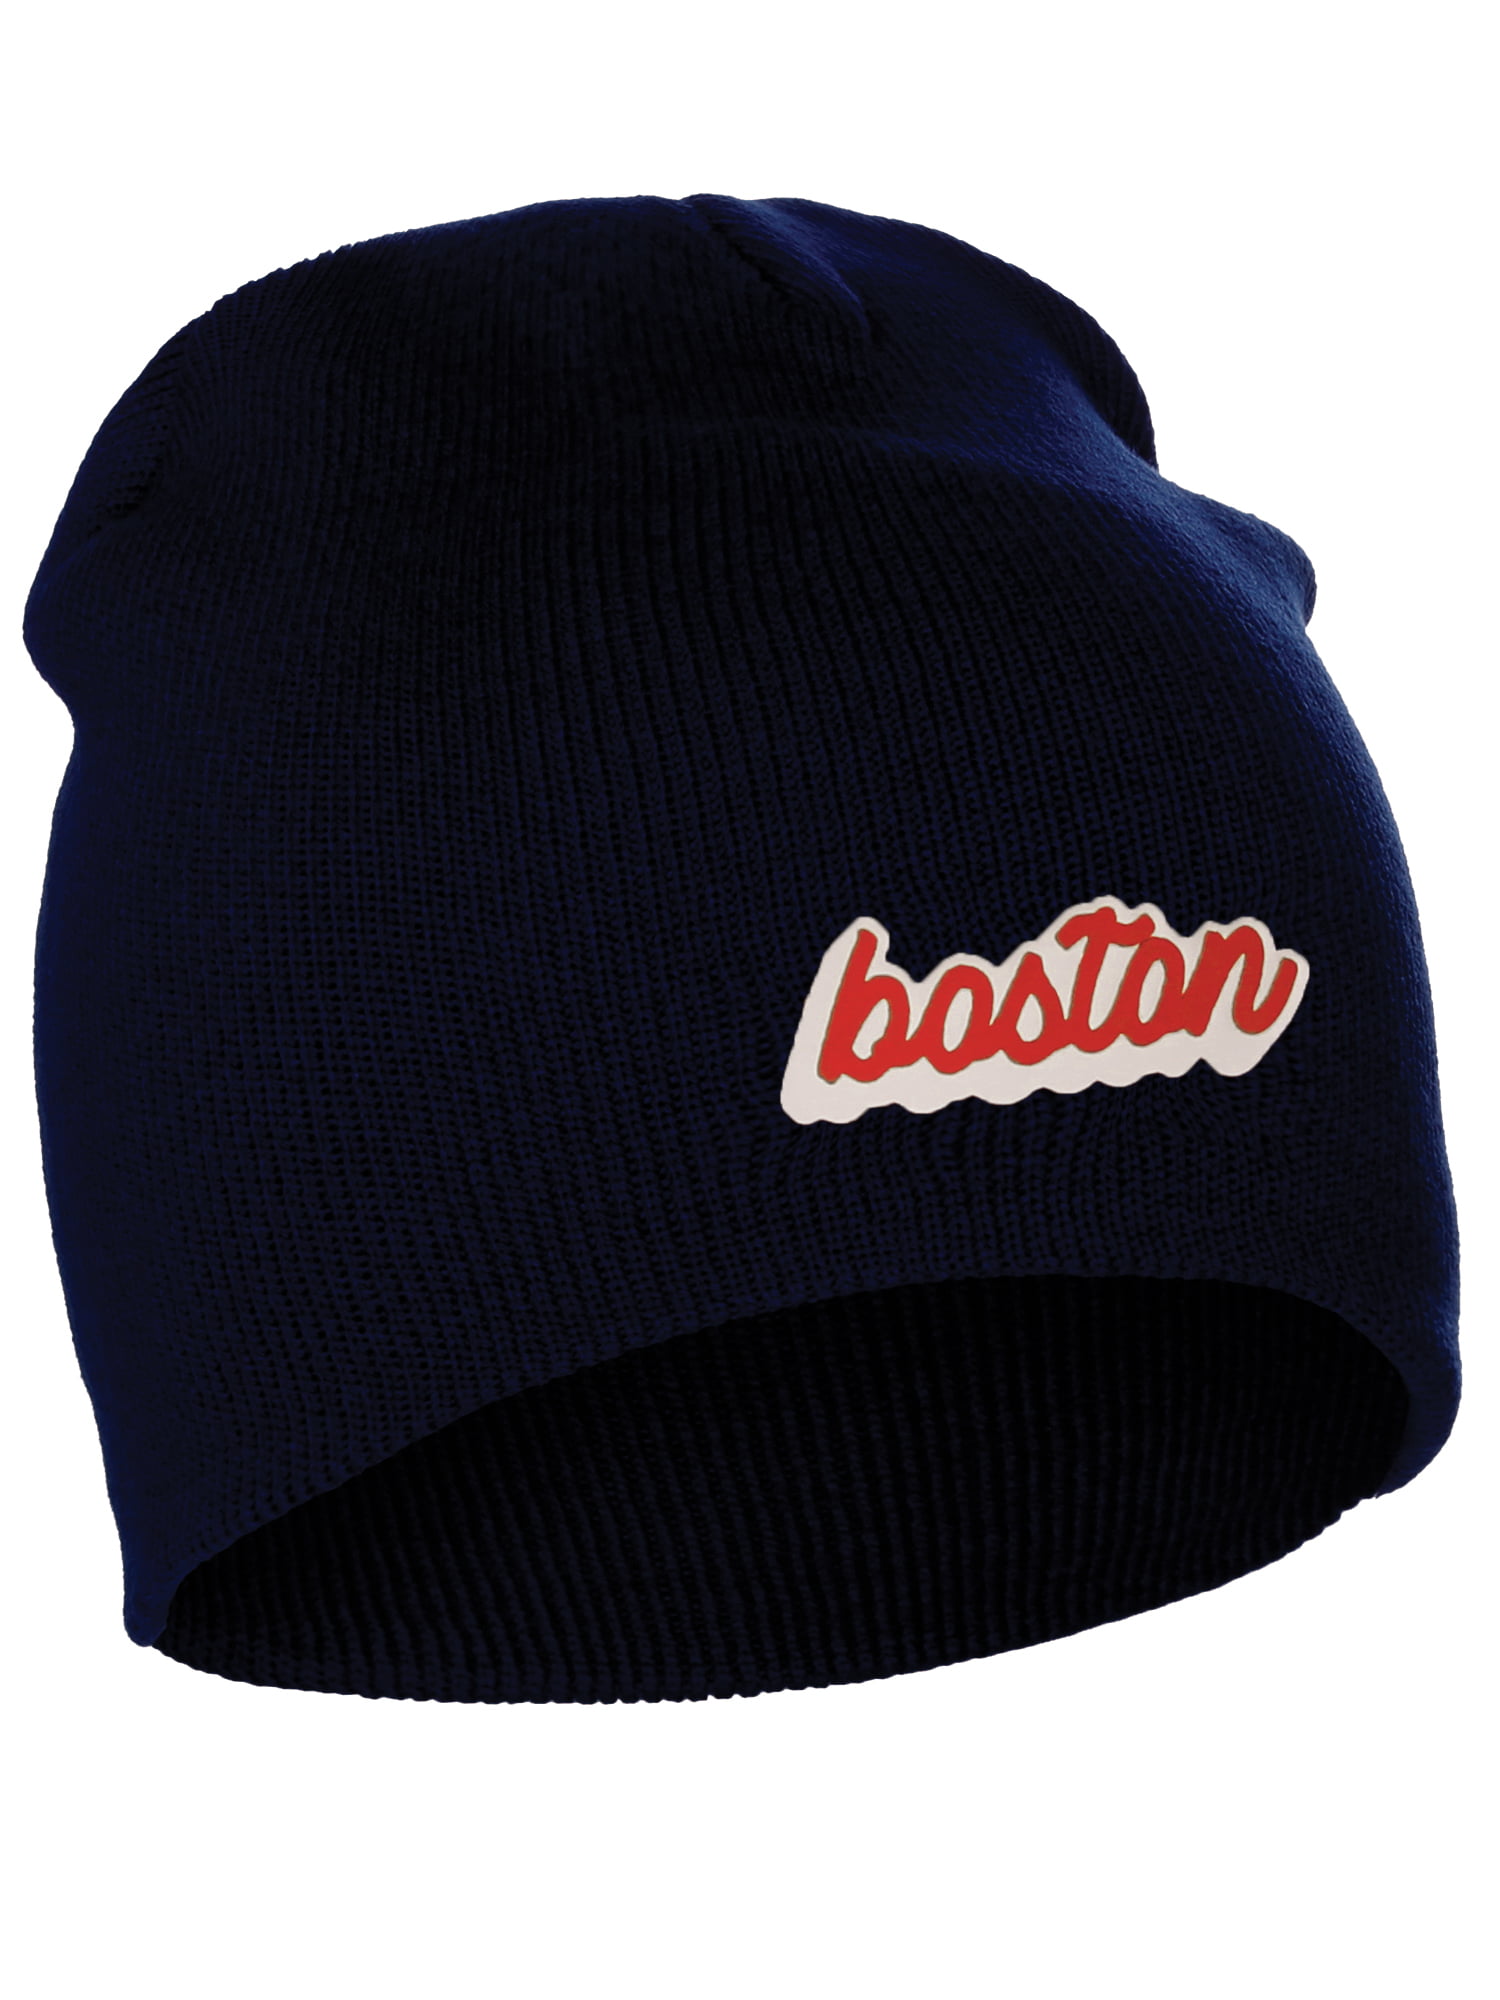 Boston Bruins Beanie Hat, Plain Bruins Knitted Ski Toque